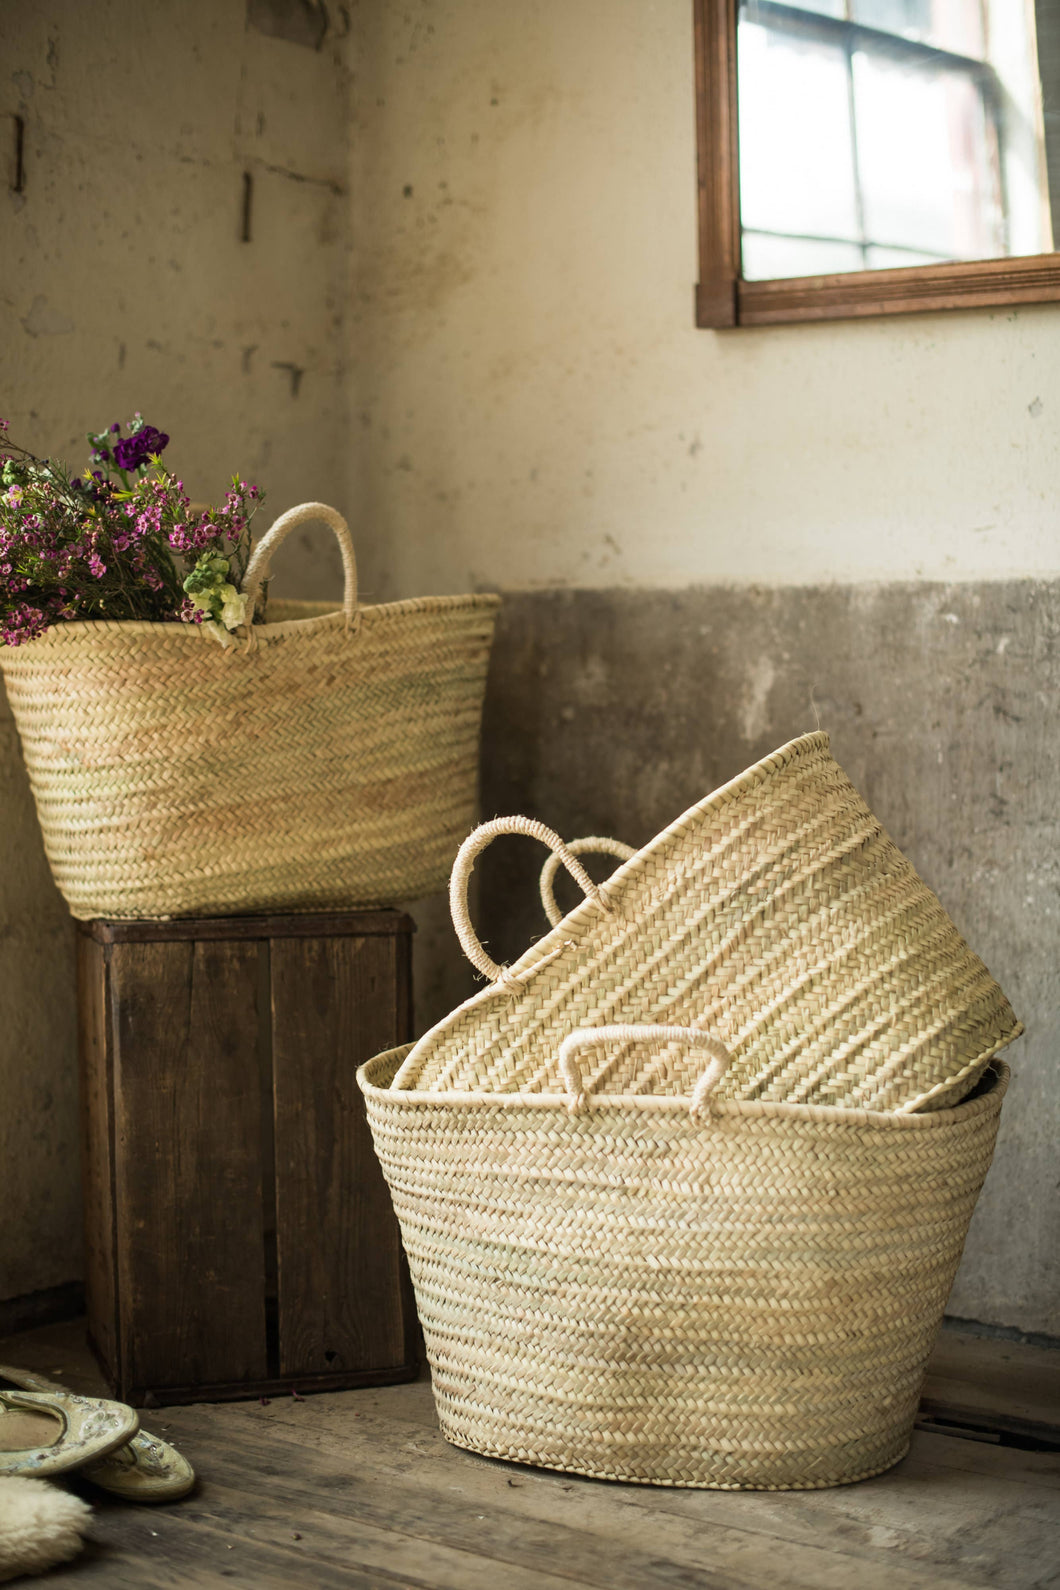 Sisal handled baskets - Medium